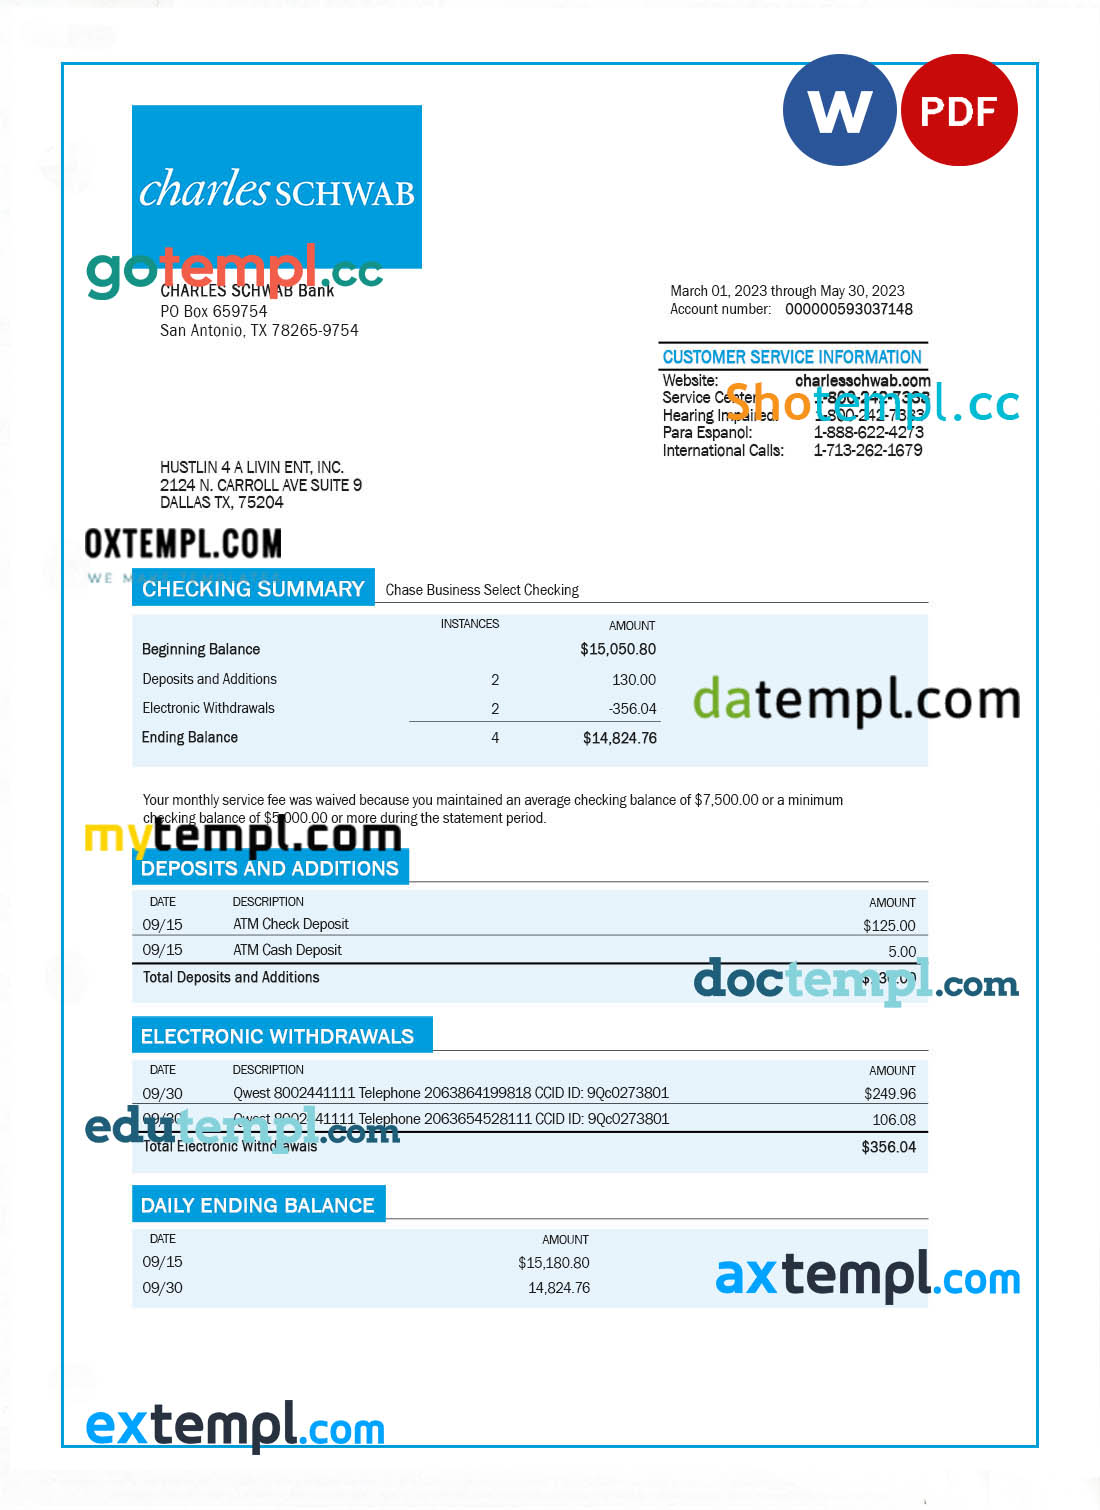 Russia Bank ZENIT visa debit card, fully editable template in PSD format